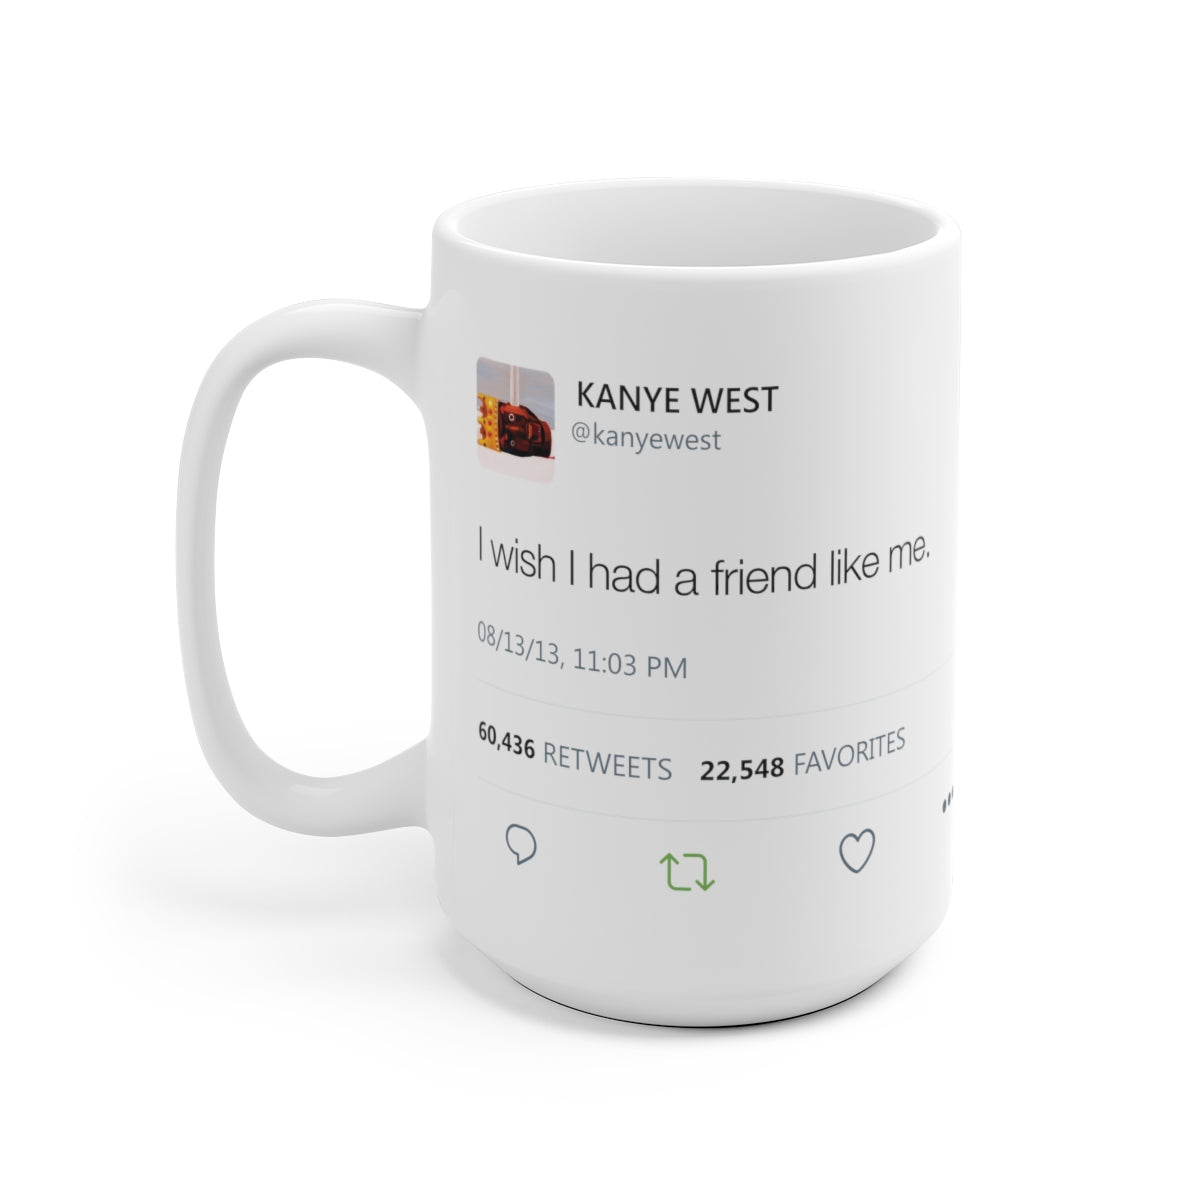 I wish I had a friend like me - Kanye West Tweet Mug-15oz-Archethype